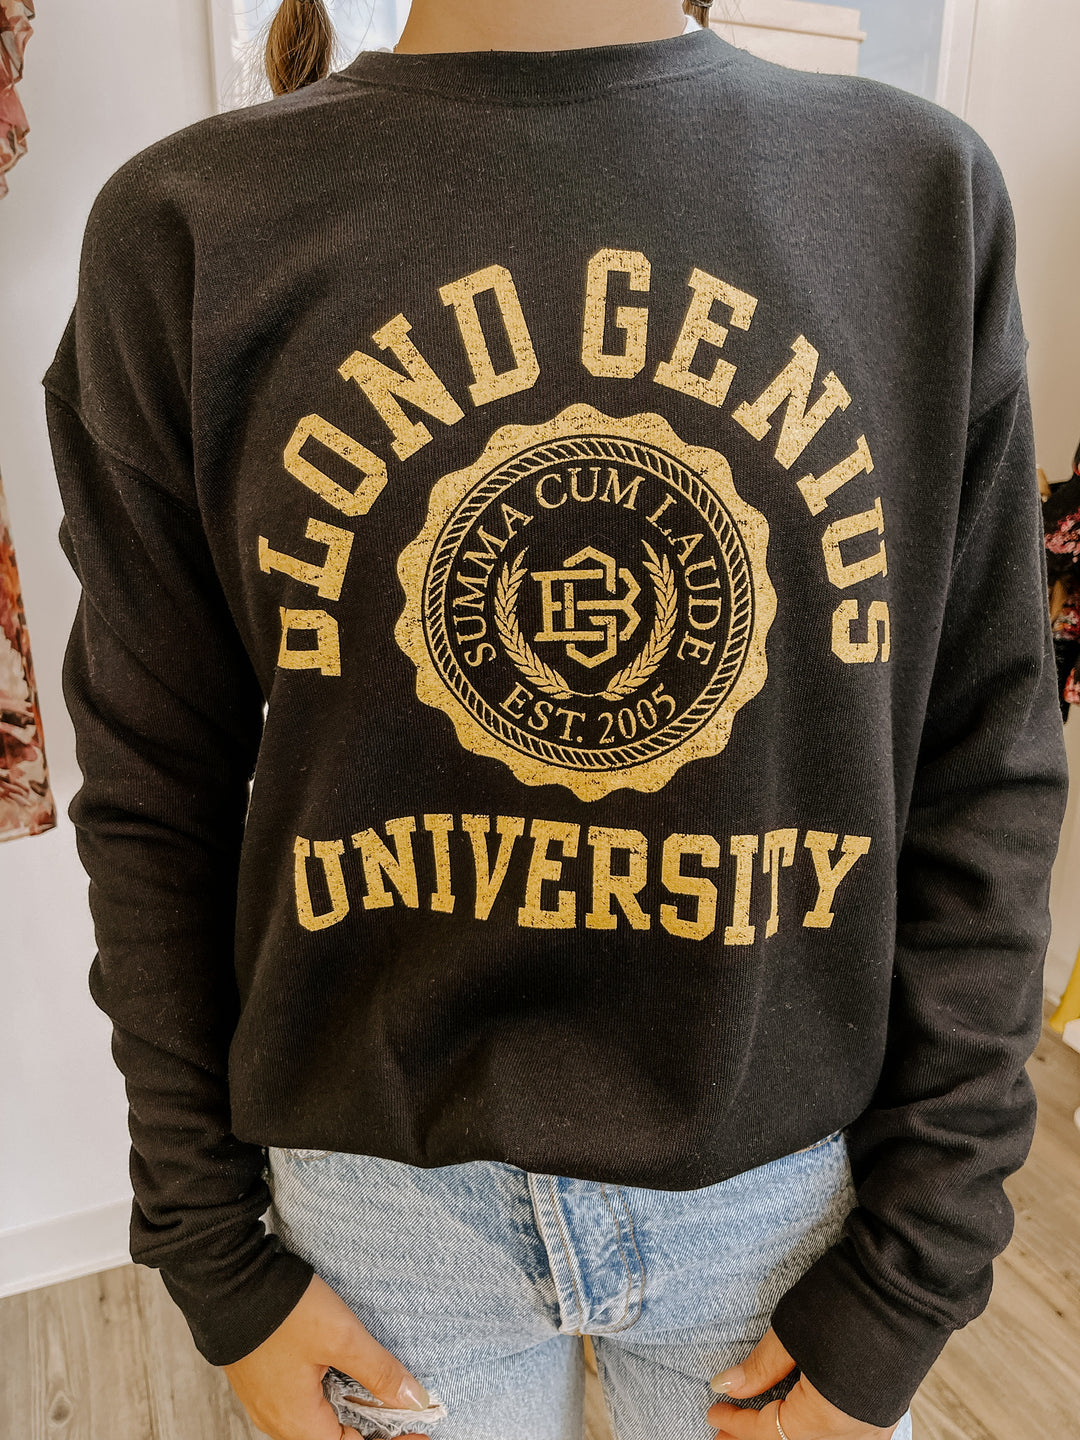 Blond Genius - Blond Genius University in Black with Yellow